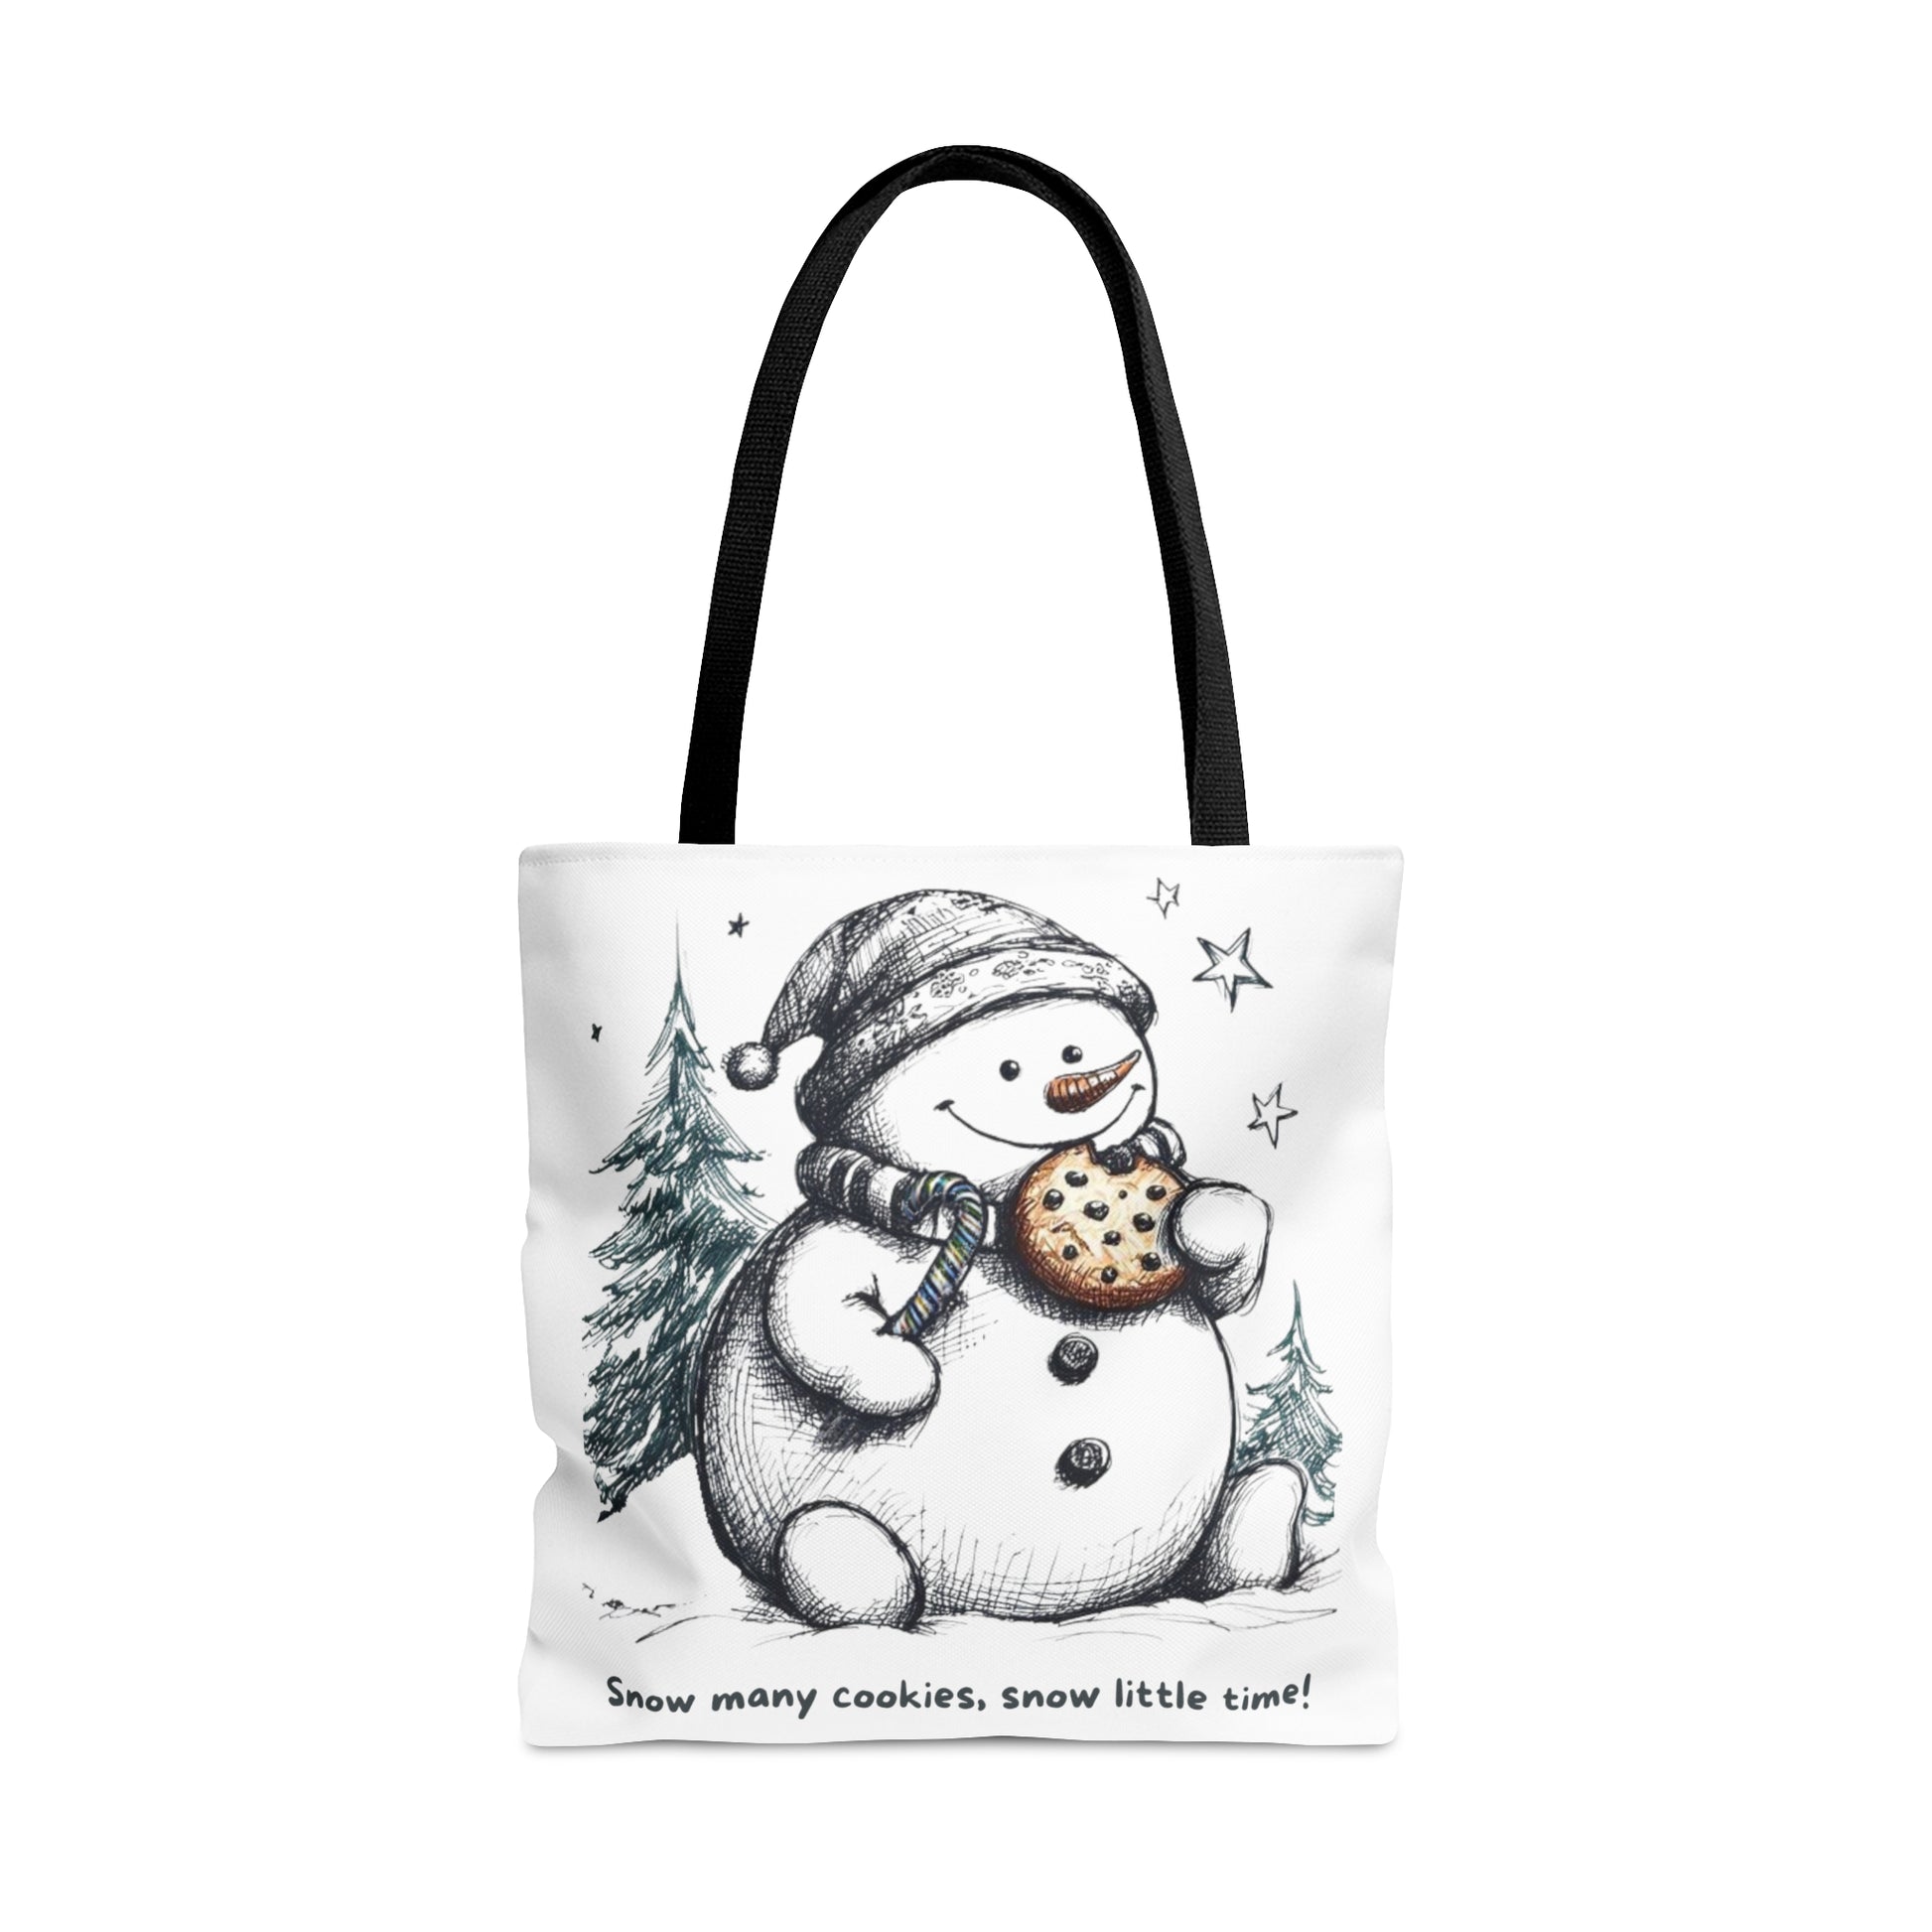 Snow Many Cookies, Snow Little Time! Christmas Tote Bag, Snowman Eating Cookies Christmas Bag, Holiday Tote Bag (AOP) - Amesti Road